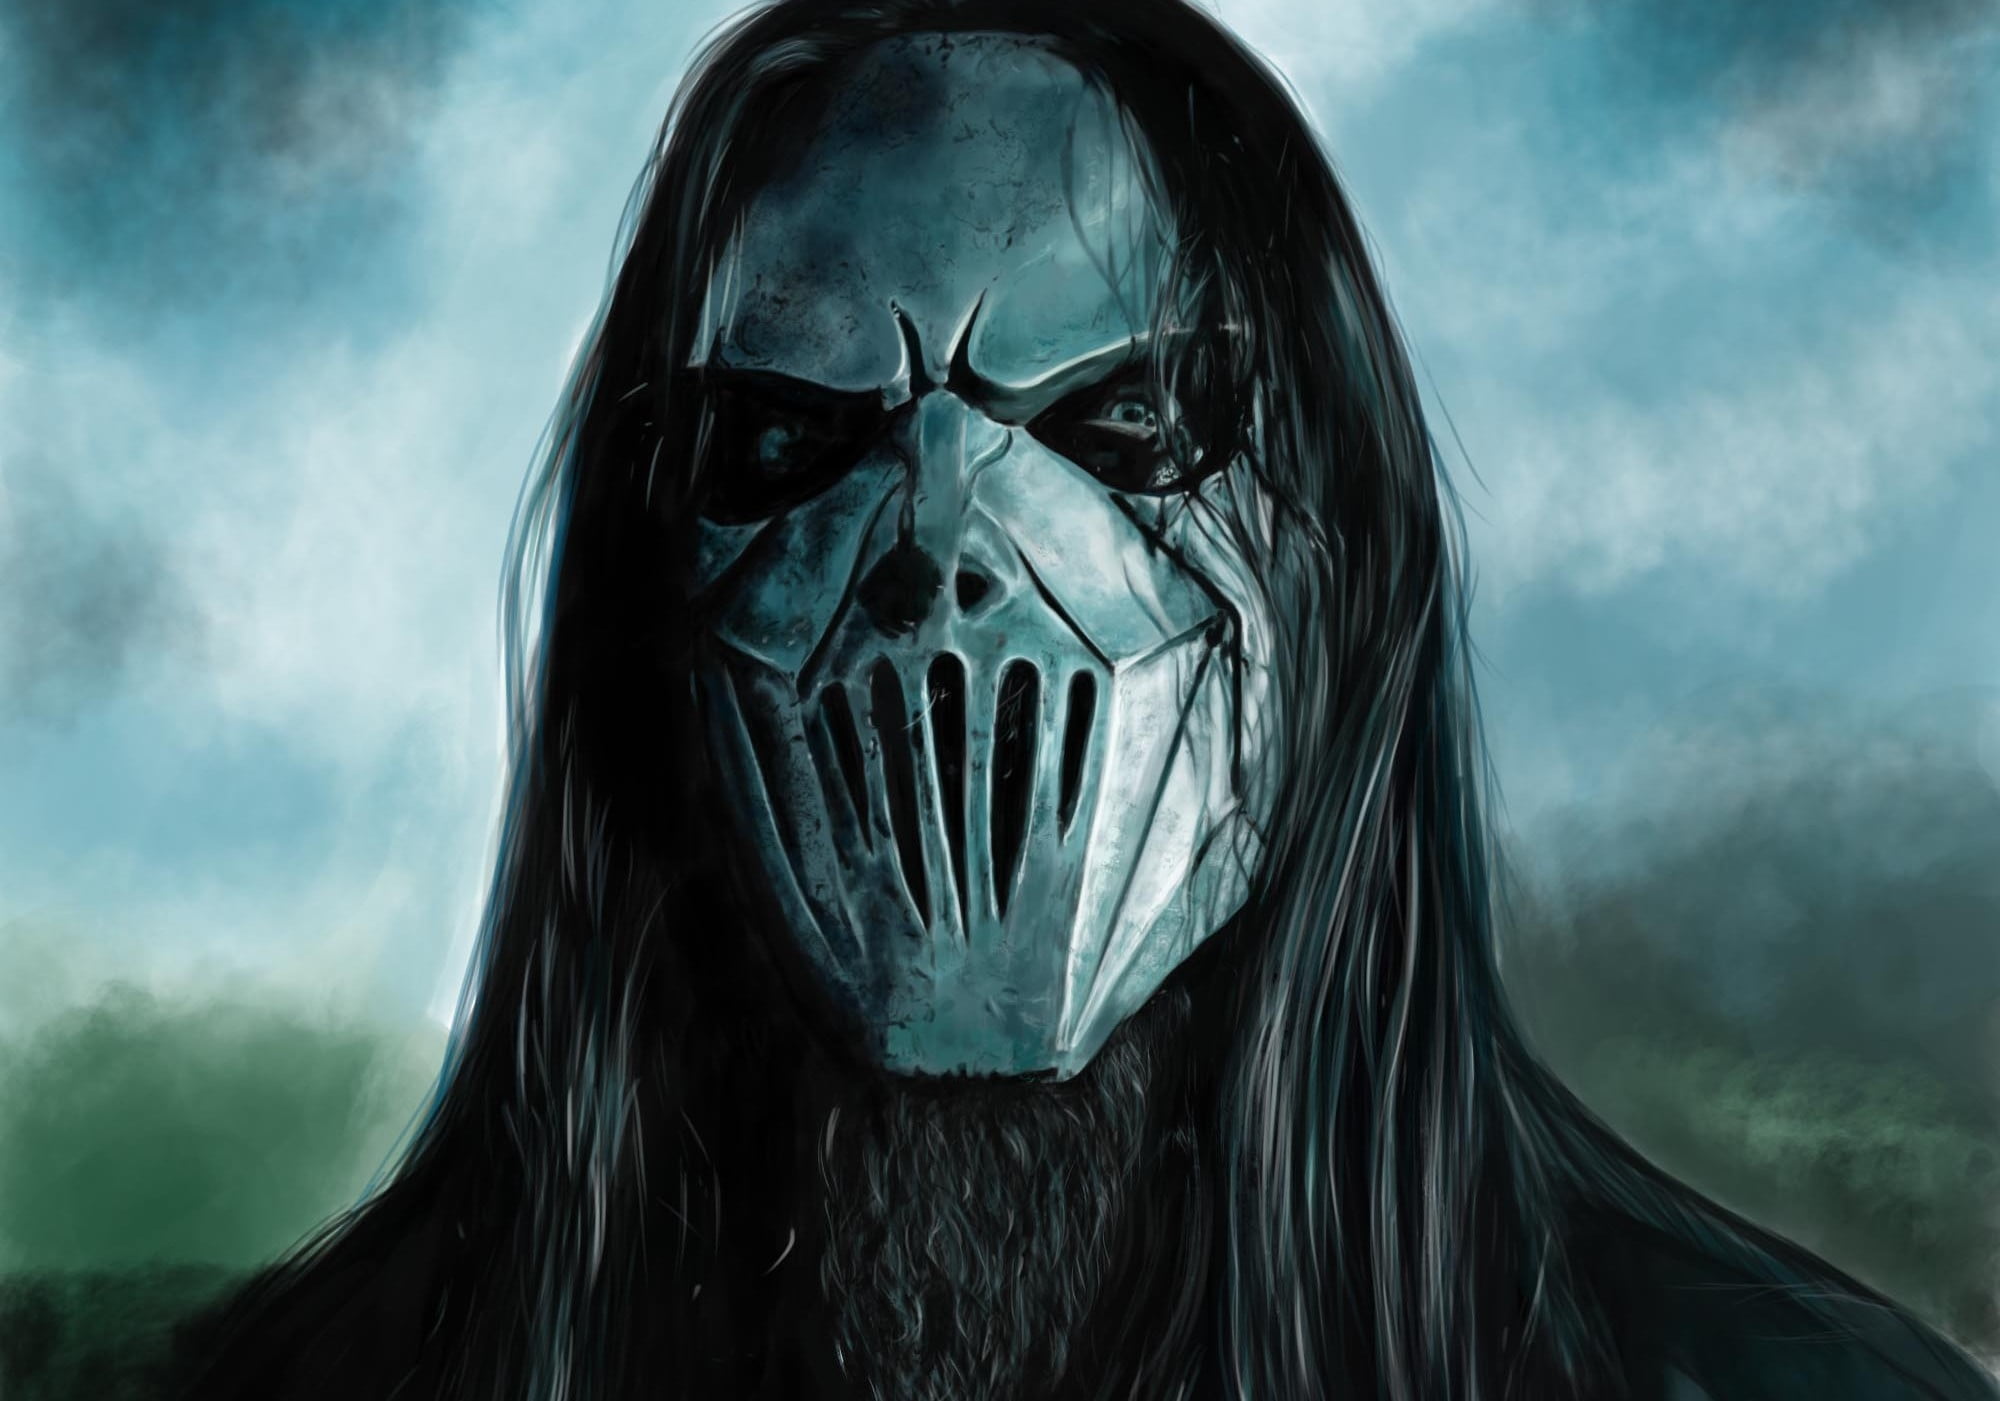 Slipknot Guitarist Drawing Slipknot Hd Wallpaper Heavy Metal Hd Wallpaper Backgrounds Download